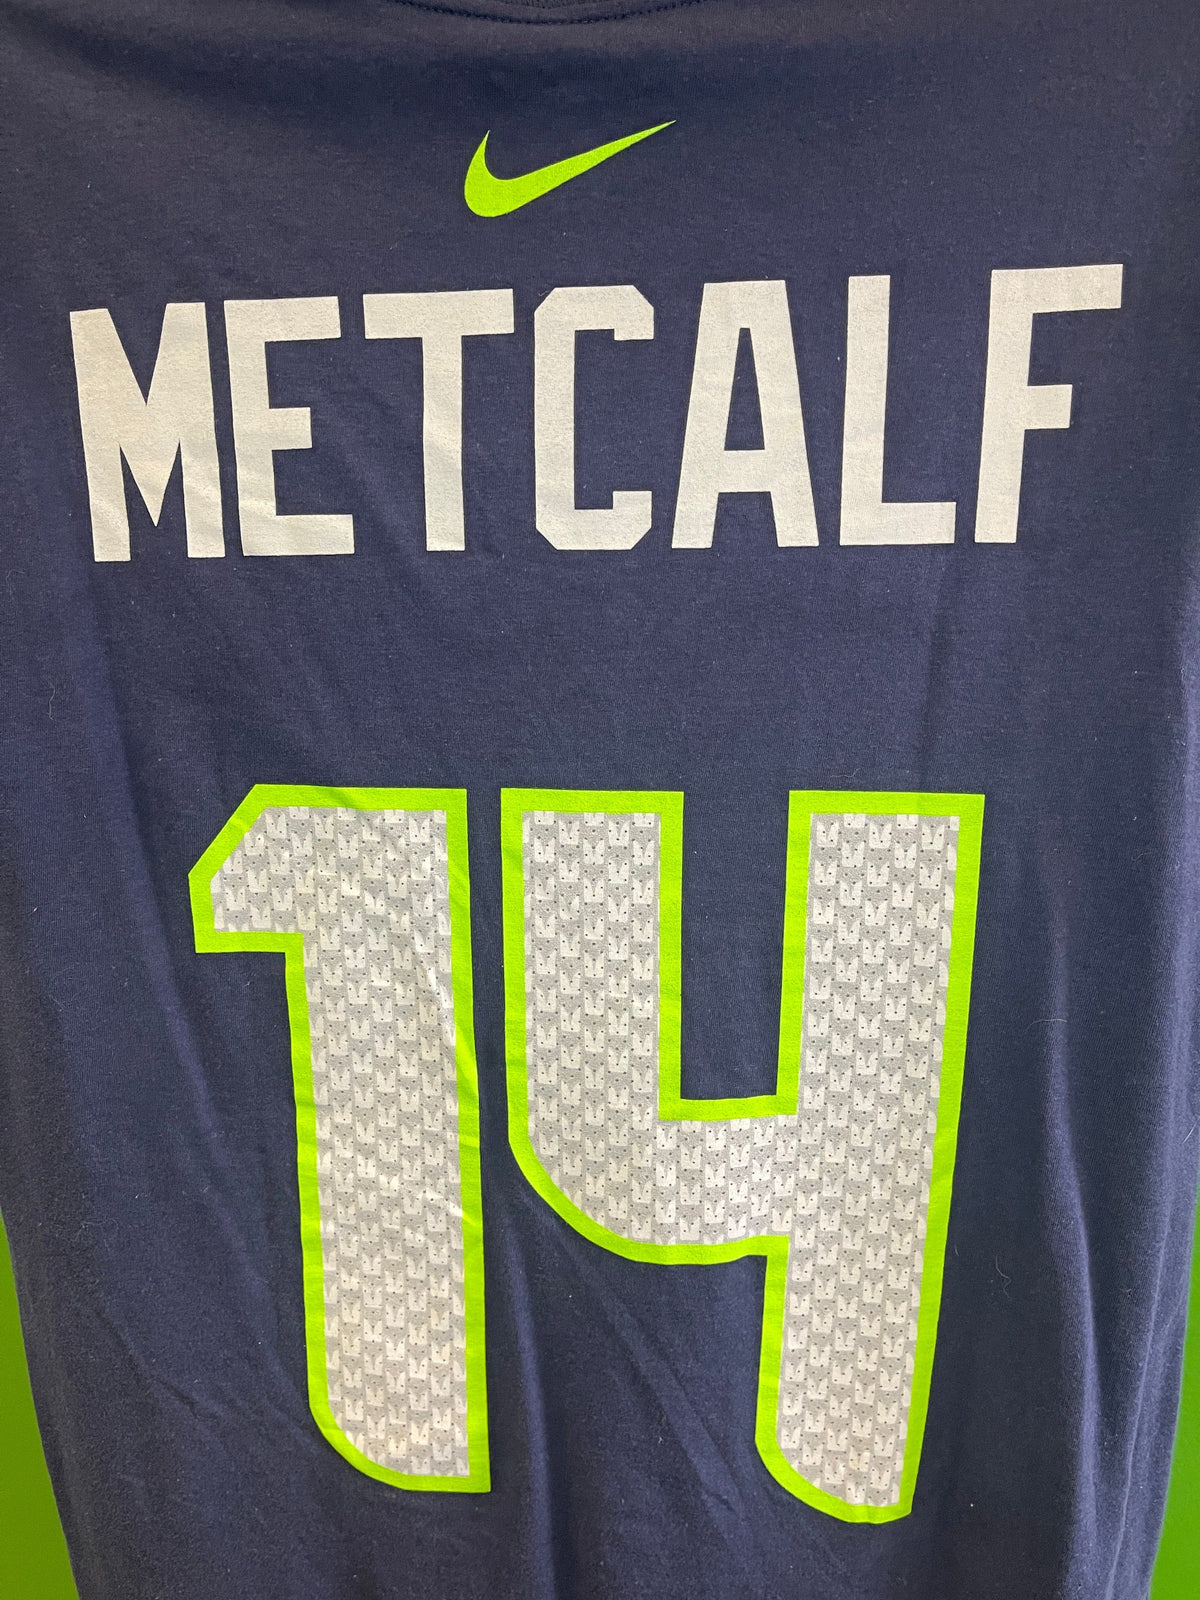 NFL Seattle Seahawks DK Metcalf #14 T-Shirt Men's Large NWT